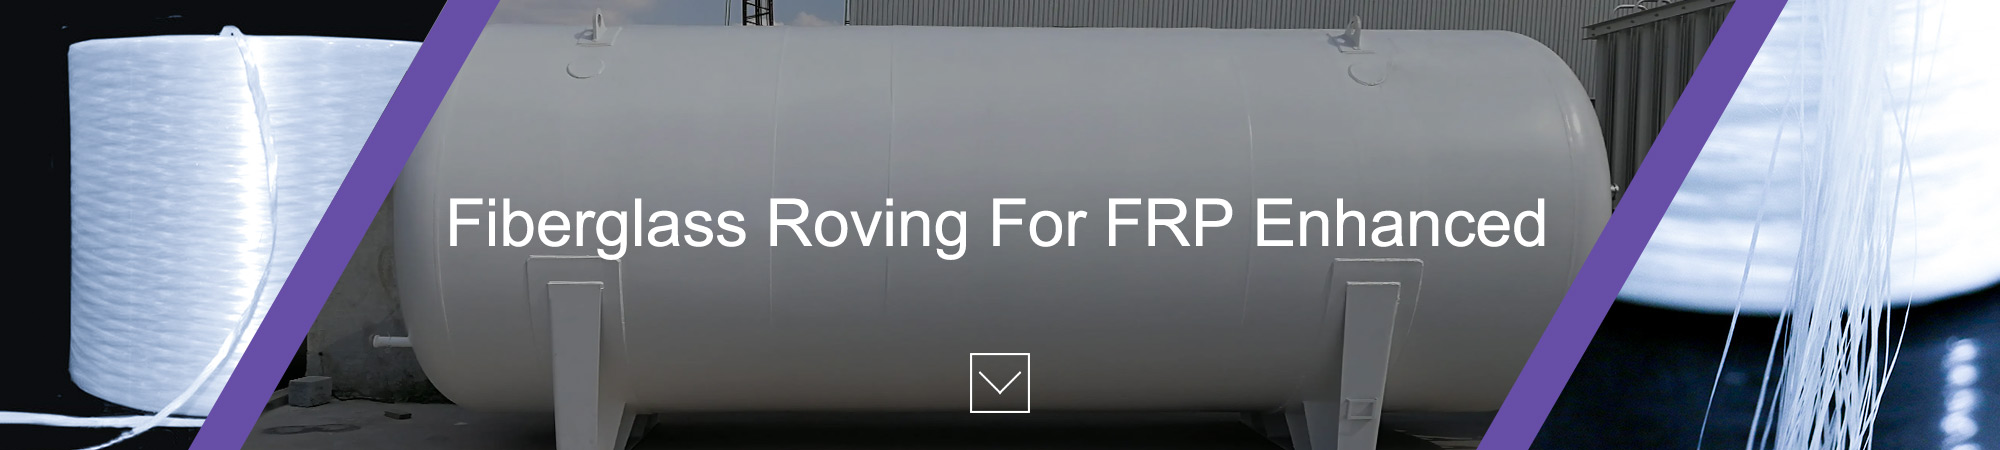 fiberglass roving for FRP-HD Fiberglass